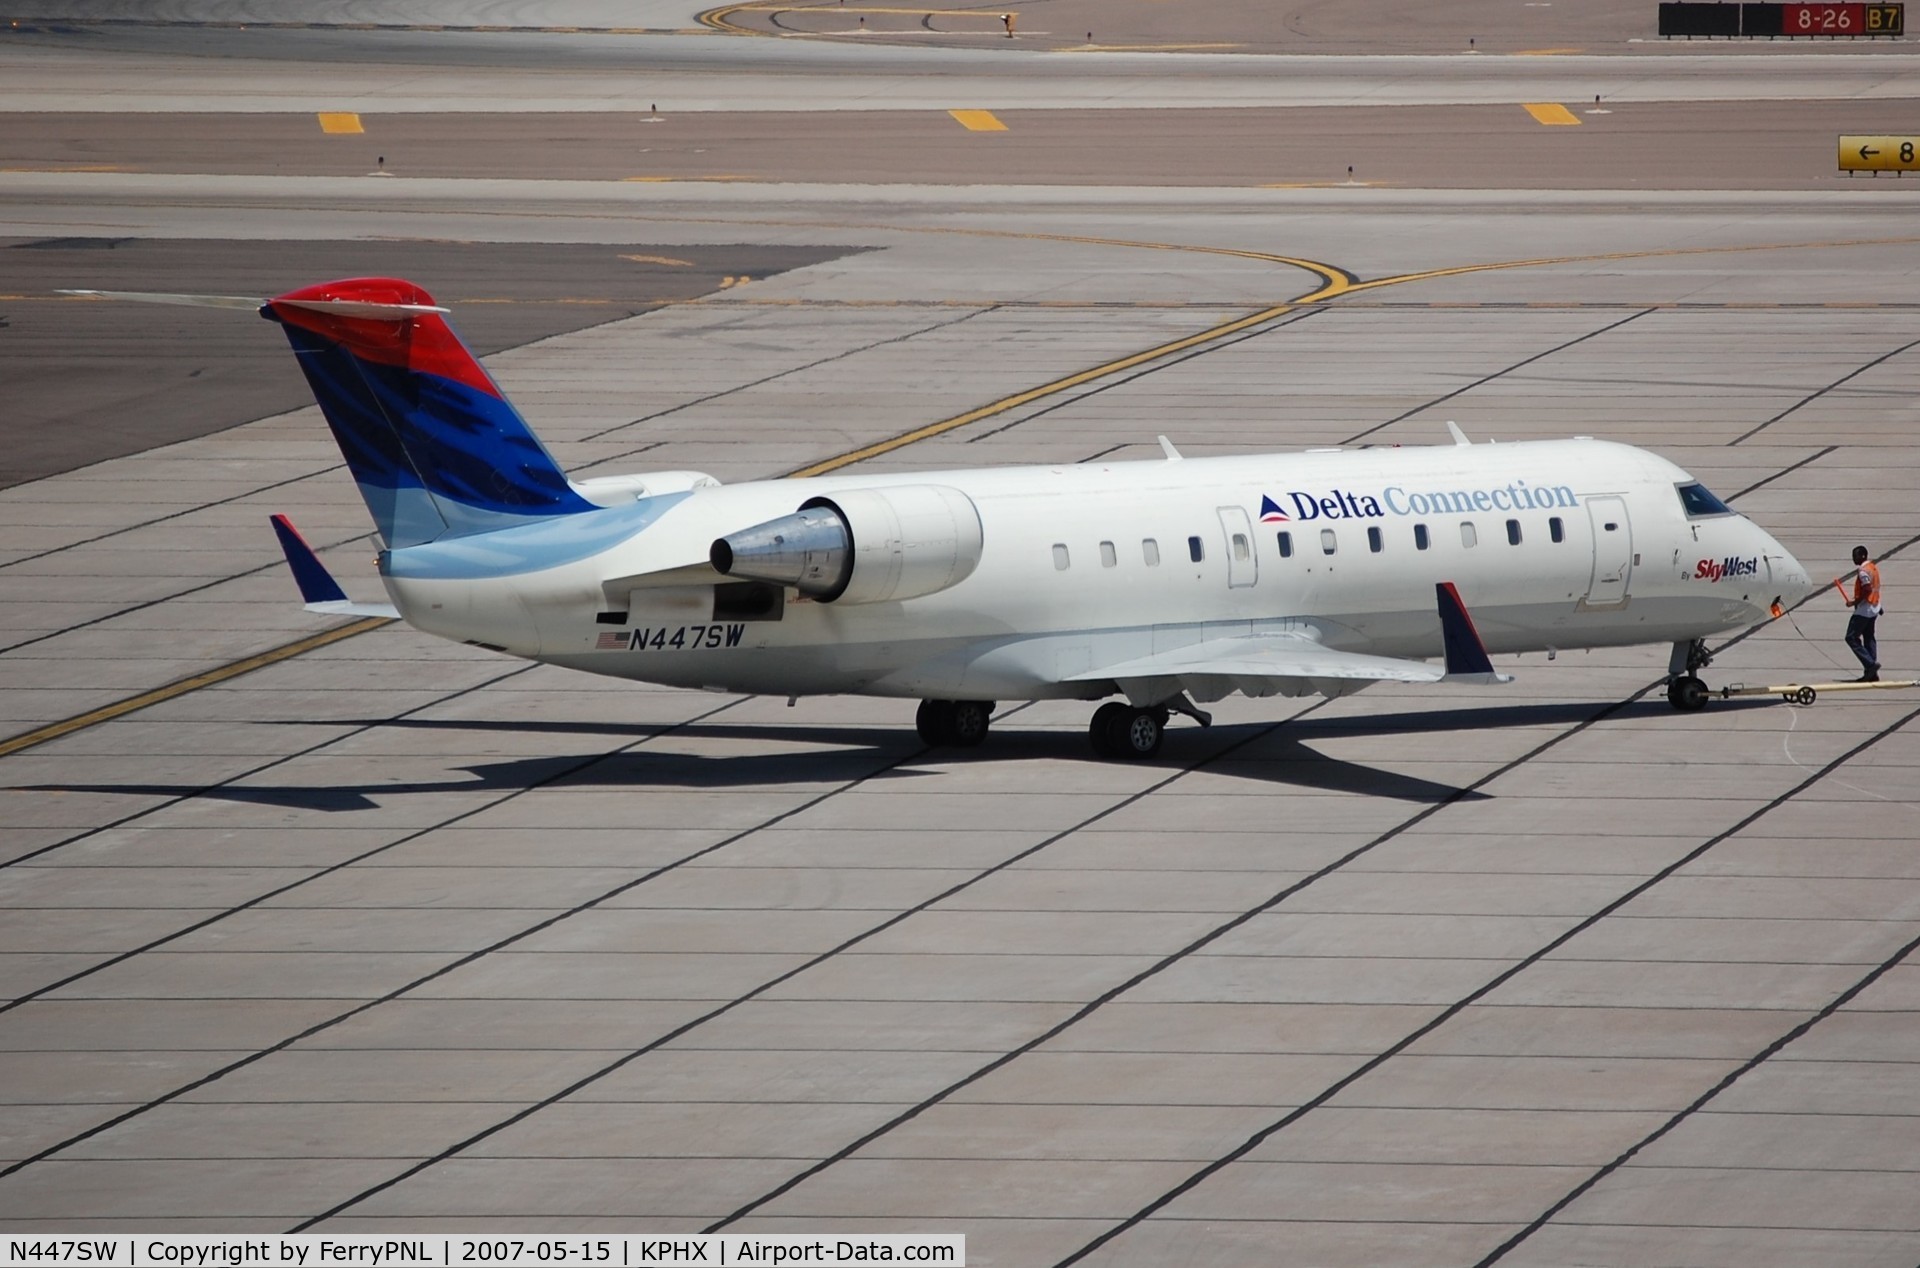 N447SW, 2002 Bombardier CRJ-200LR (CL-600-2B19) C/N 7677, Delta Connection CL200 pushed-back